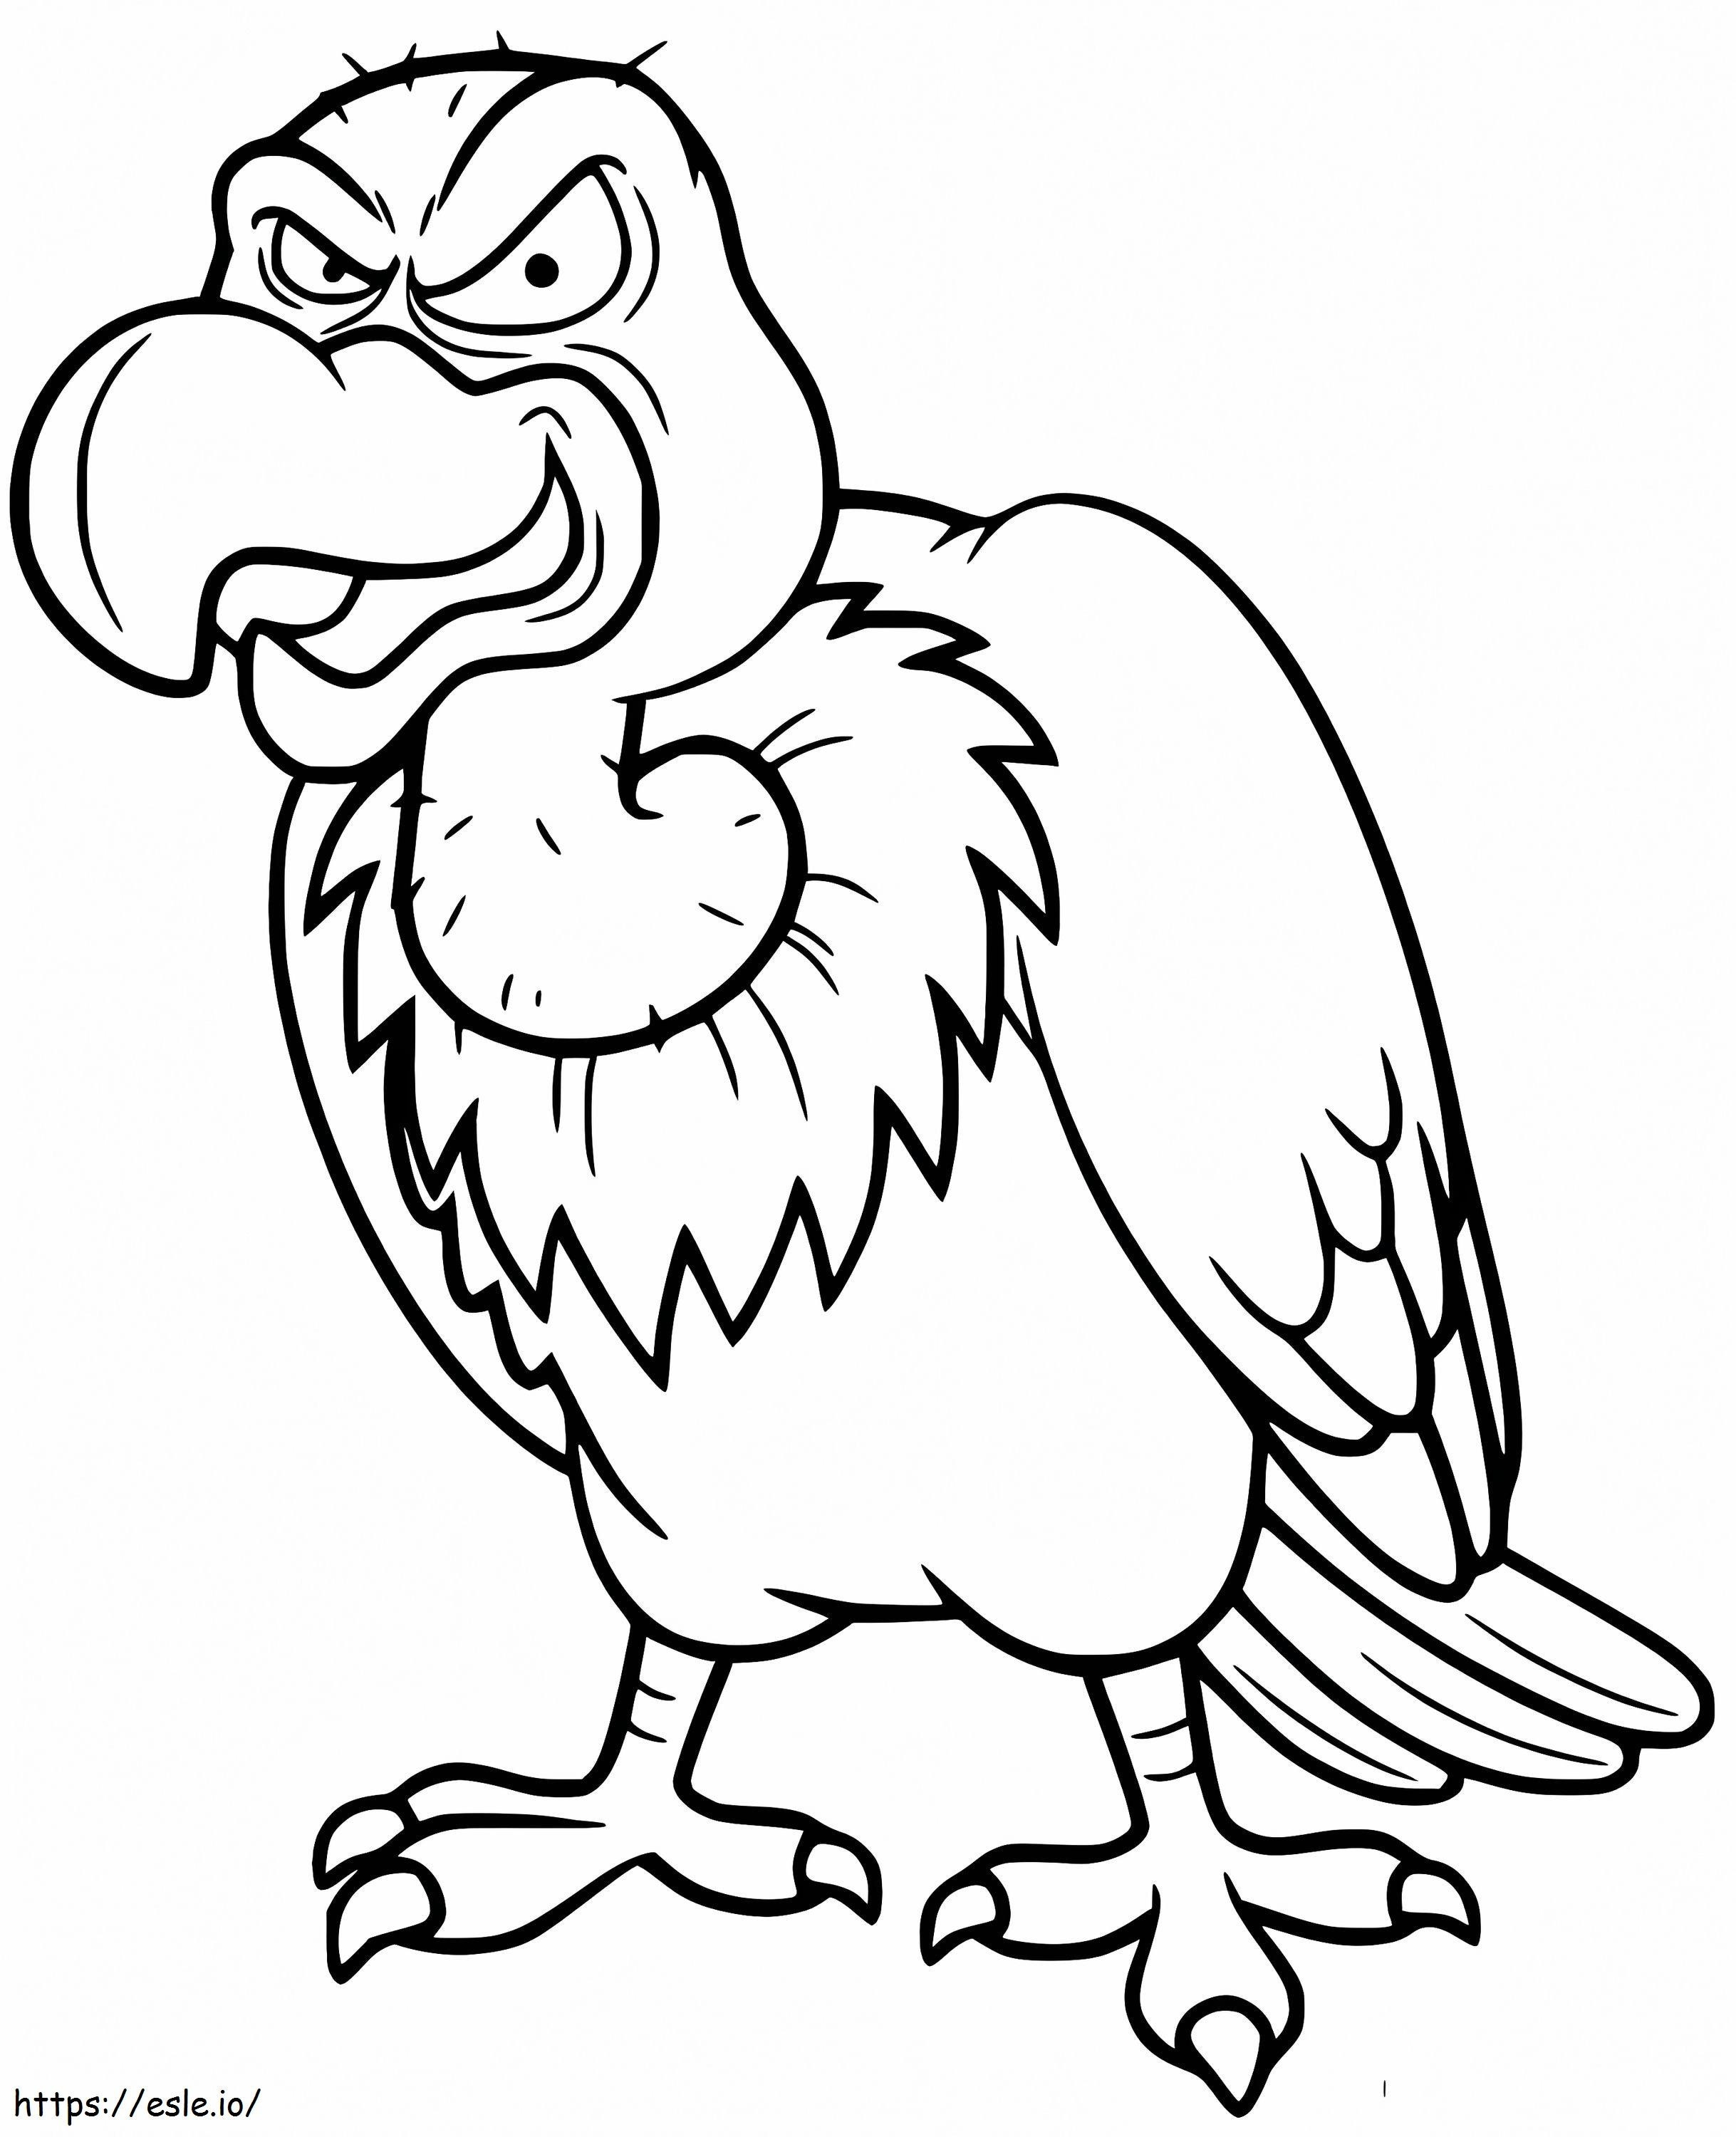 Evil Vulture coloring page